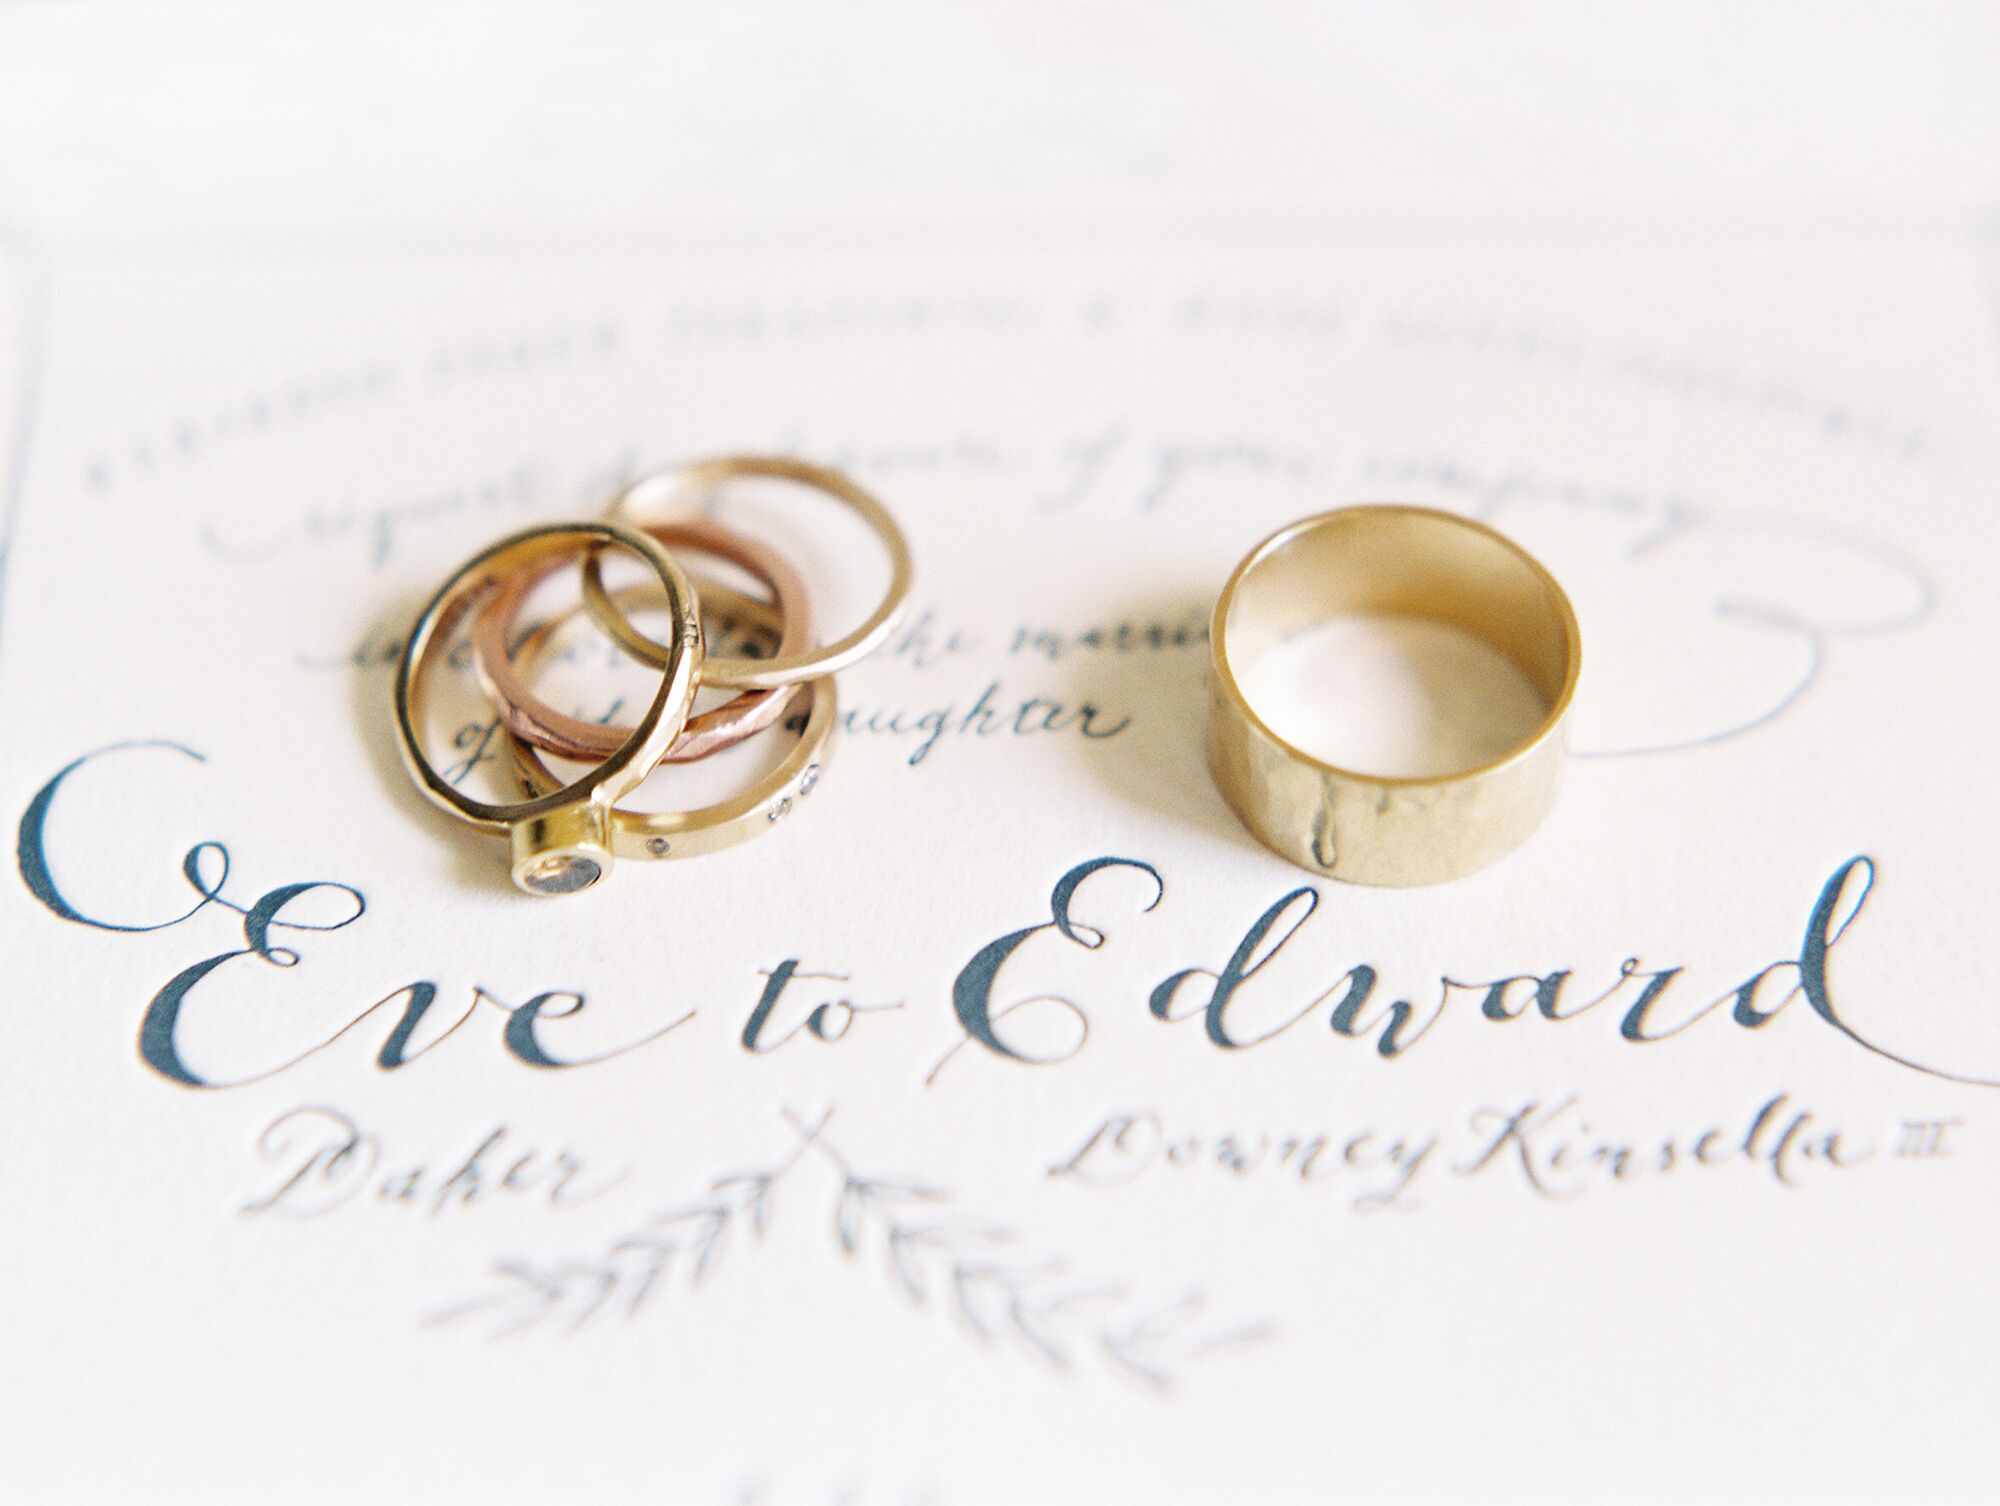 New Hot Sale Women's Engagement Ring Set Bridal Wedding Proposal Promise Gift EG